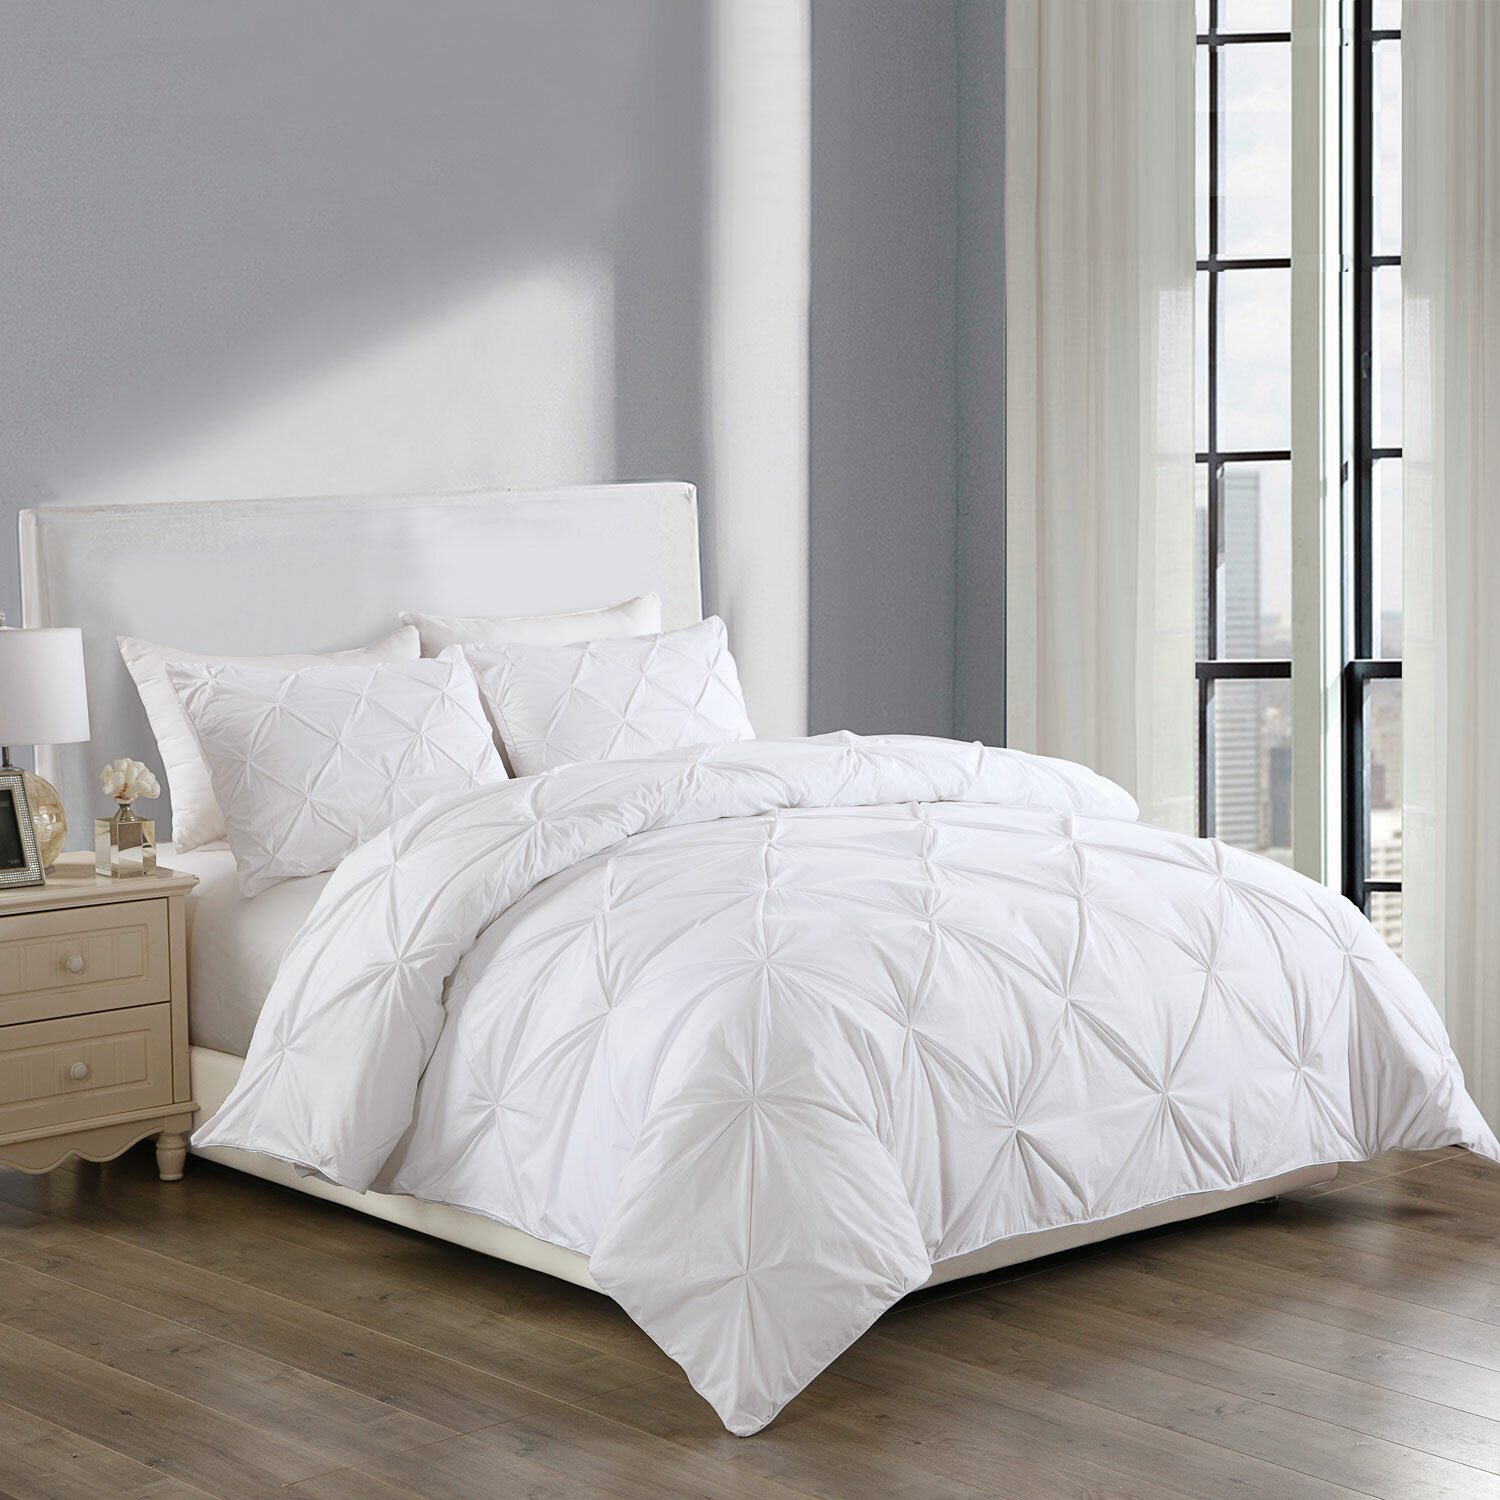 Wrinkled Luxury Duvet Cover With Pillow Cases Bedding Set White